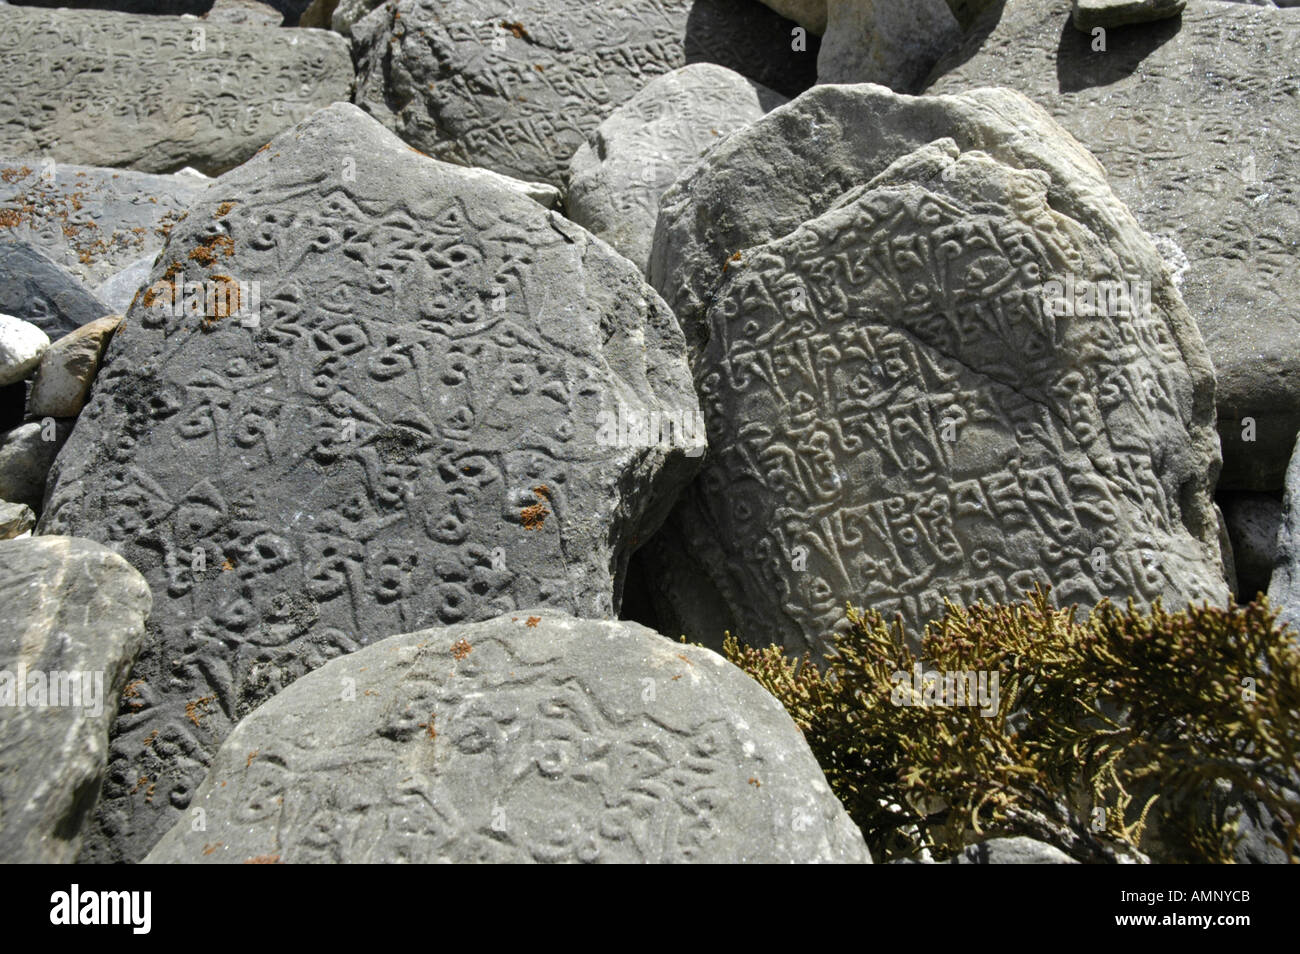 Old Tibetan script on rocks Kyang Nar Phu Annapurna Region Nepal Stock Photo